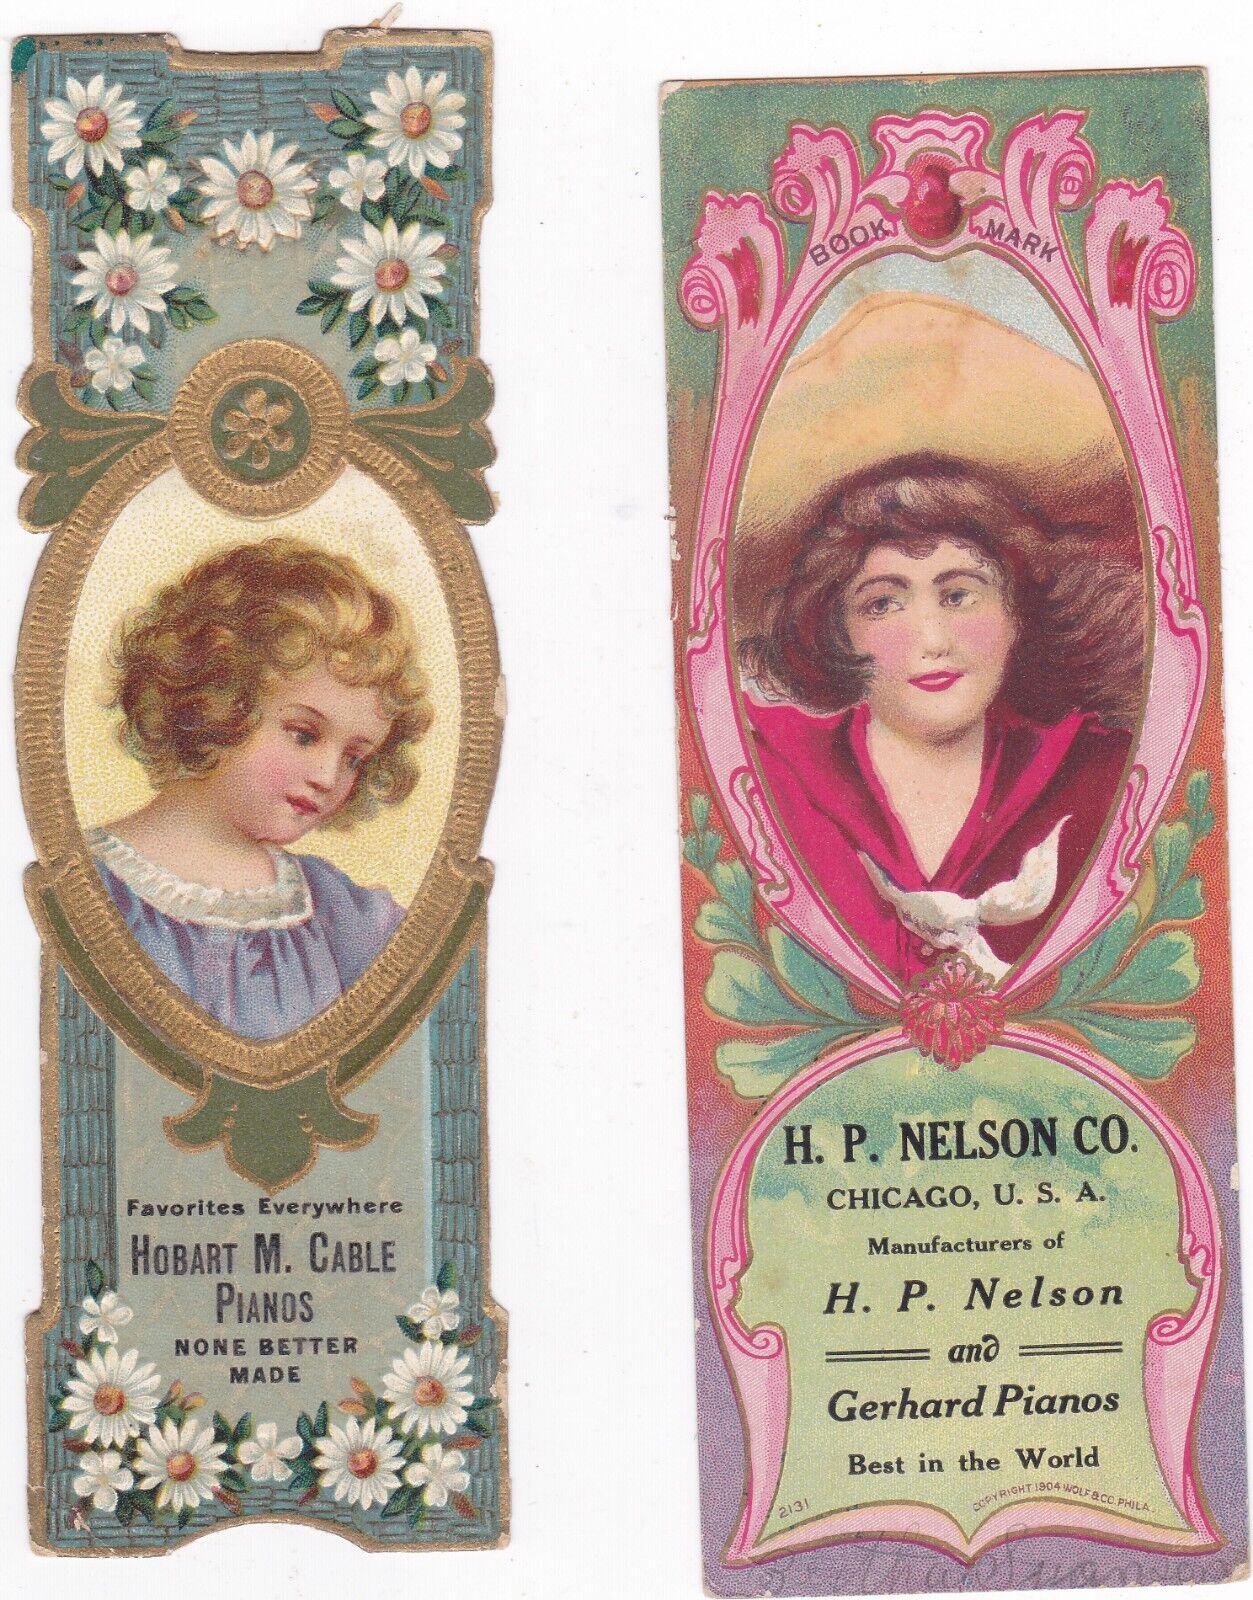 Antique Victorian Era Advertising Bookmark for Piano Companies in Chicago